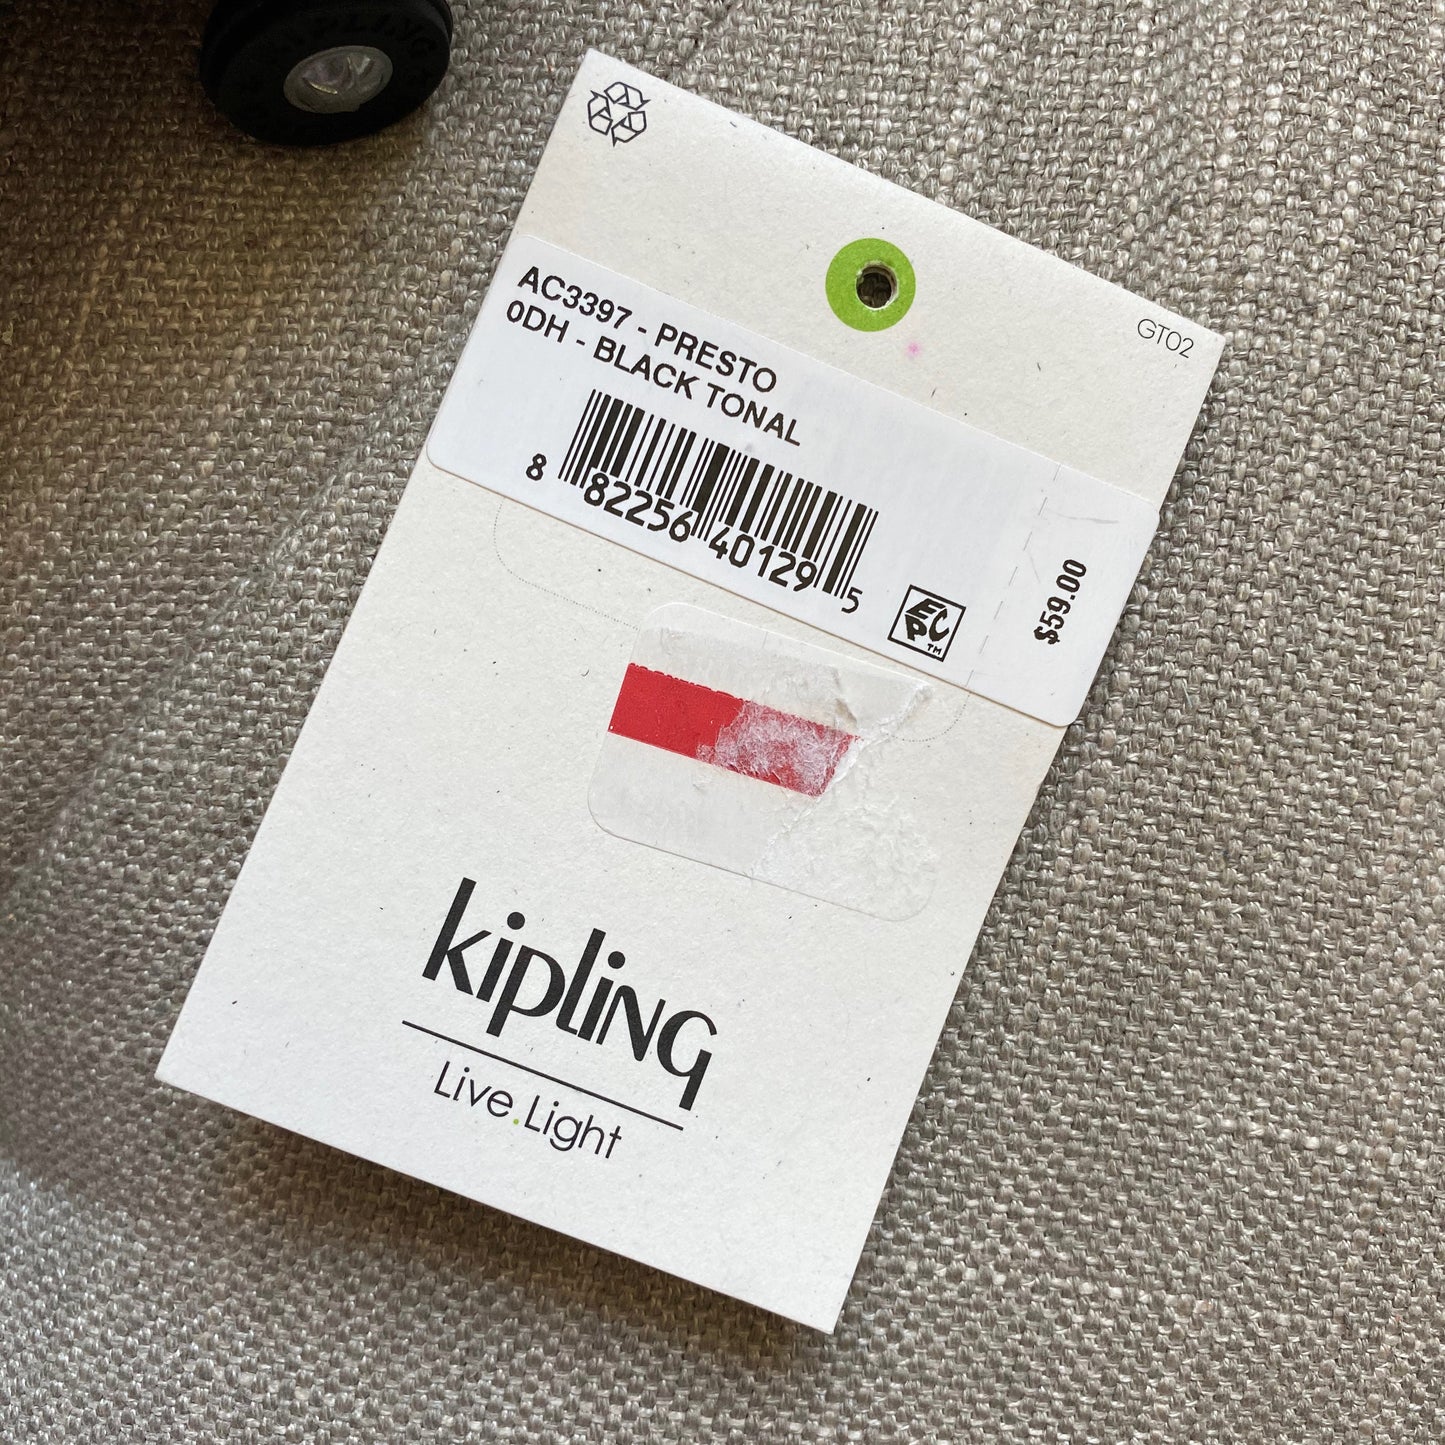 Kipling Presto Black Tonal Belt Bag Fanny Pack